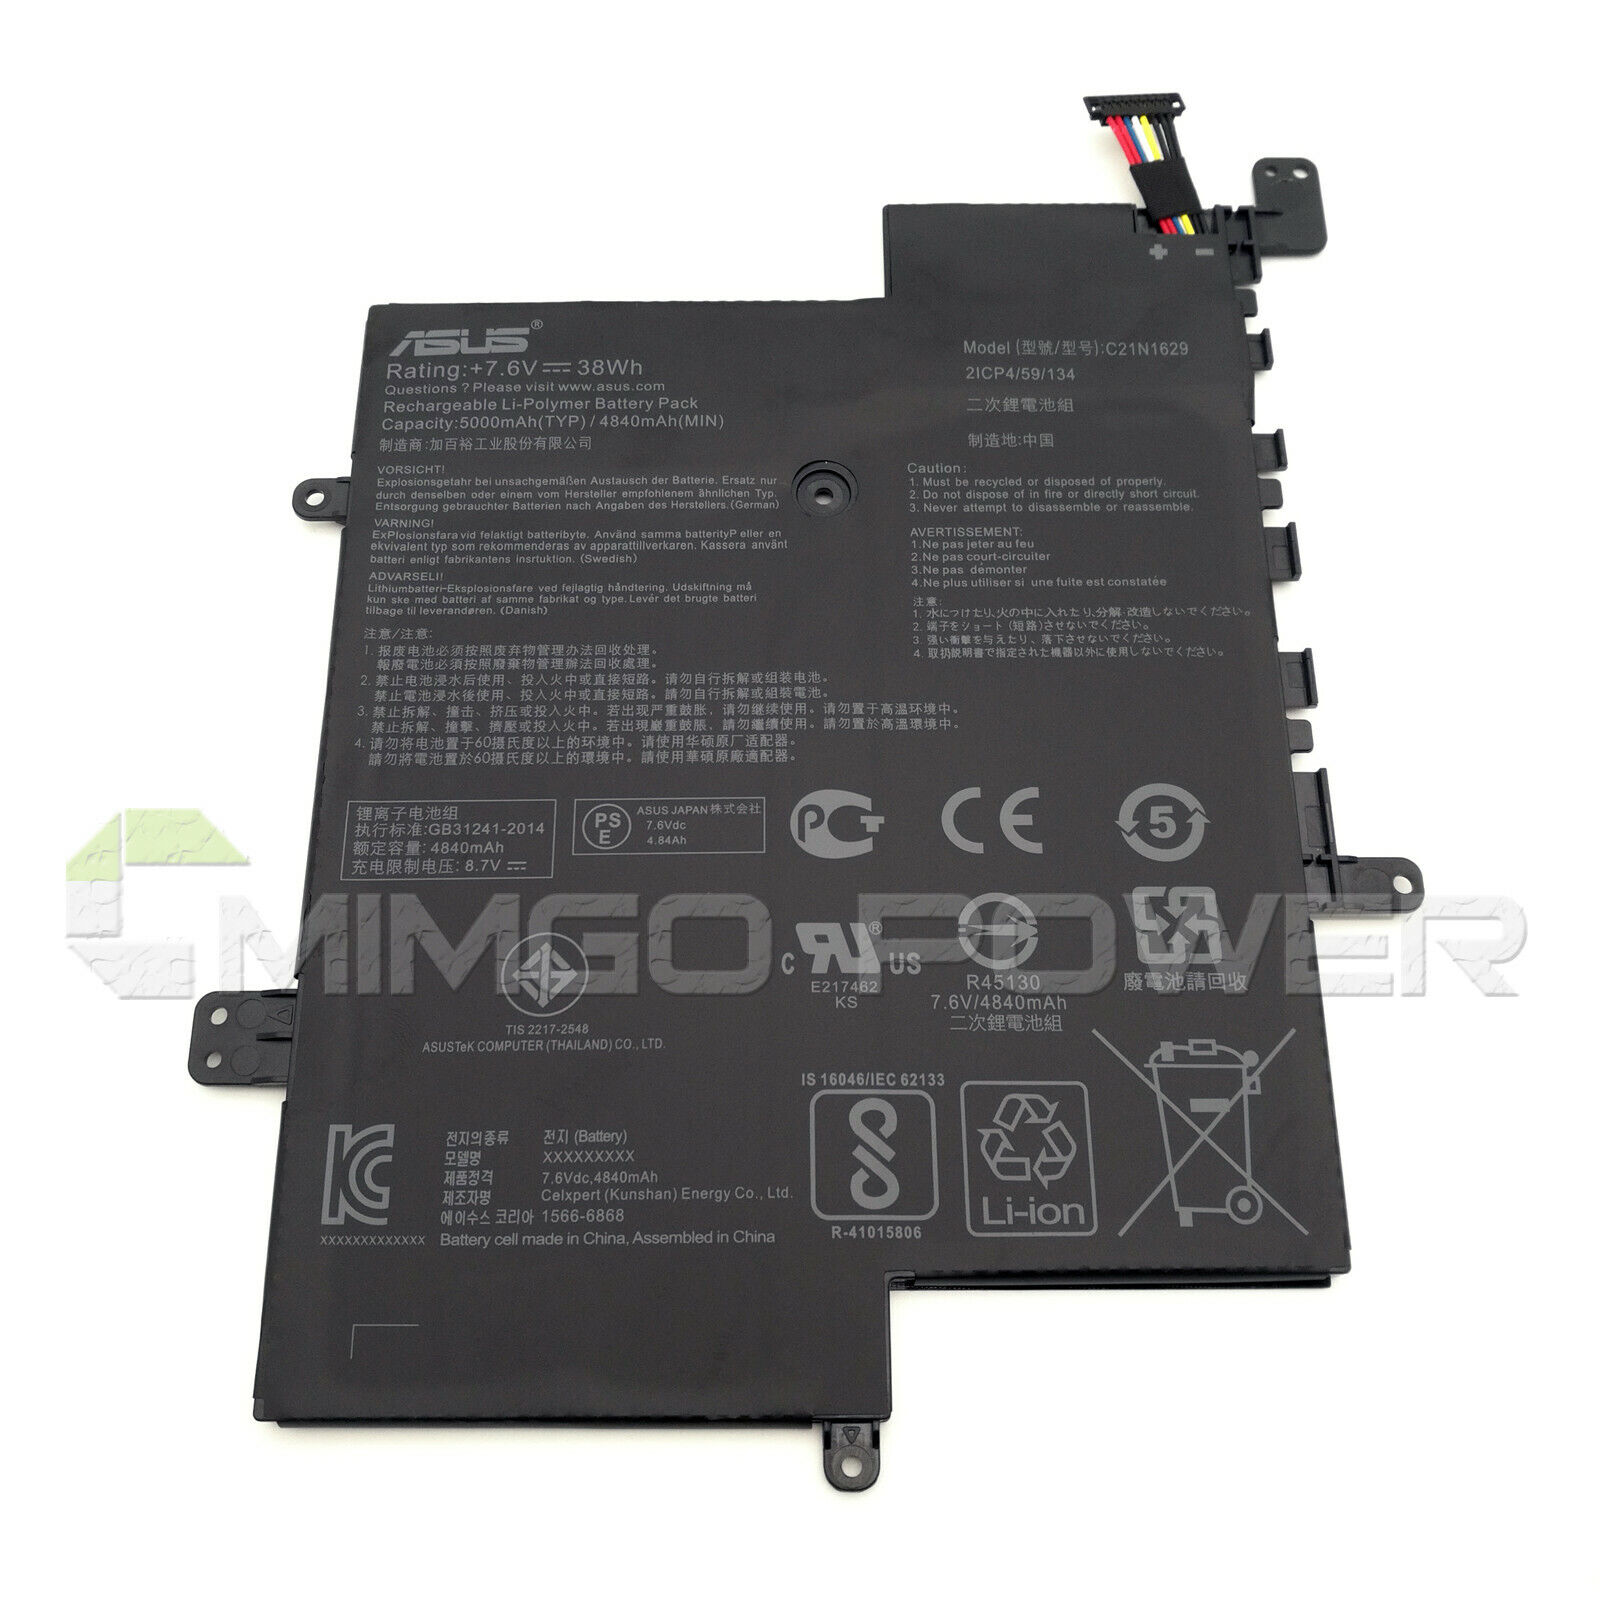 New Genuine C21N1629 Battery for Asus VivoBook E12 E203NA E203MA X207NA L203MA